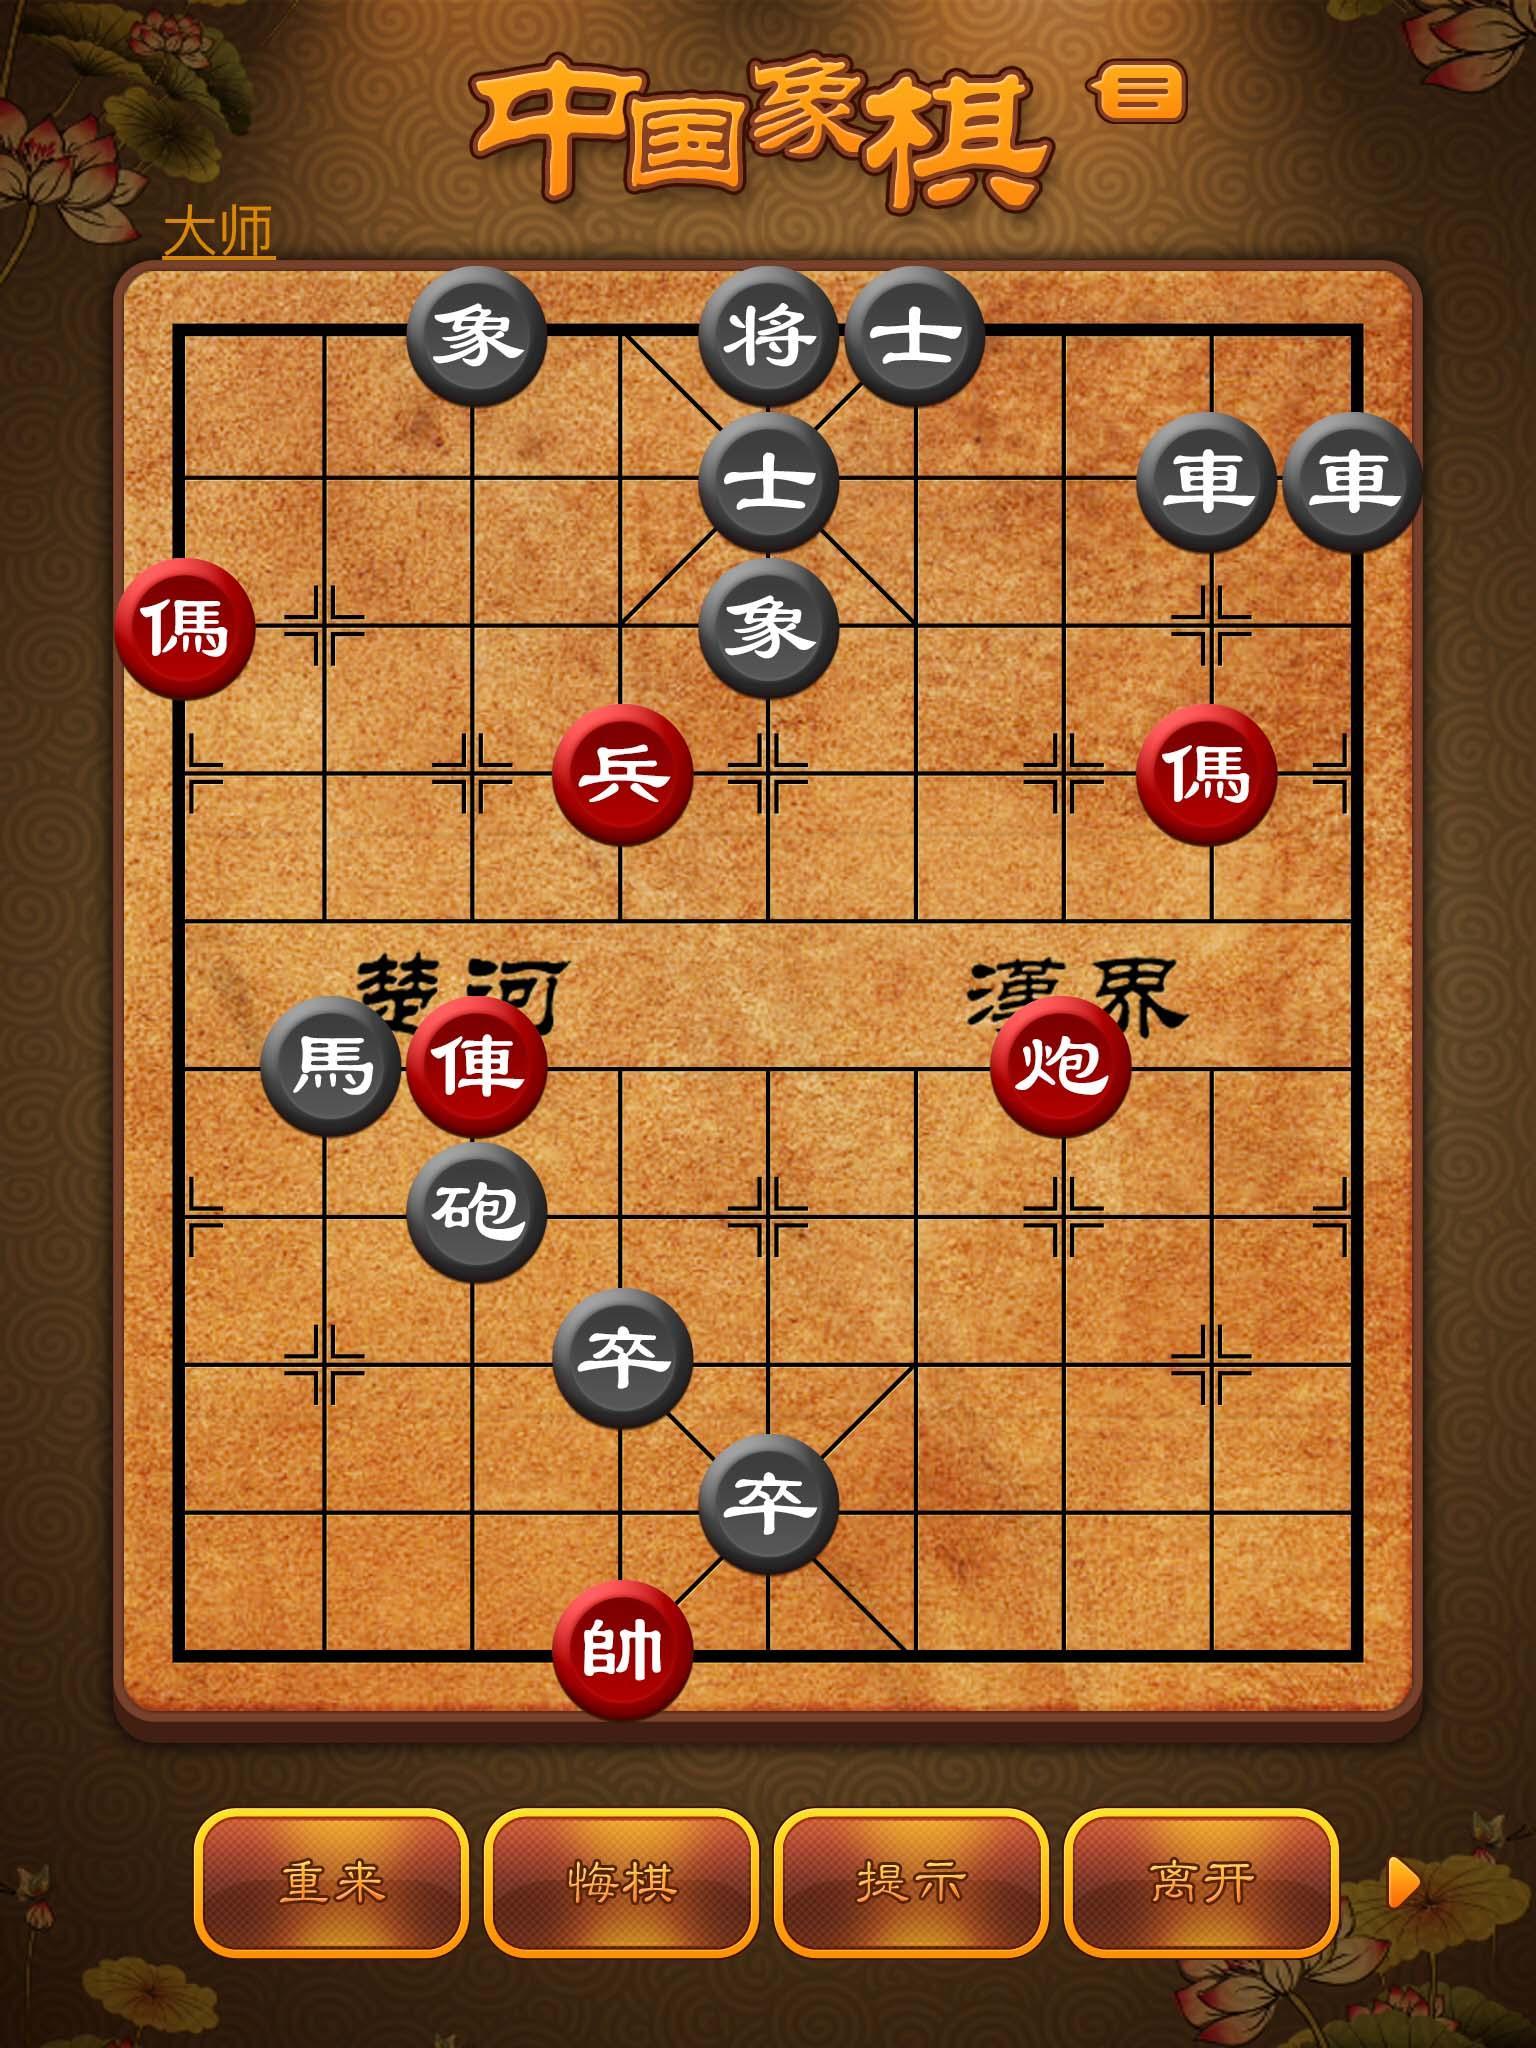 Chinese Chess, Xiangqi - many endgame and replay 3.9.6 Screenshot 9